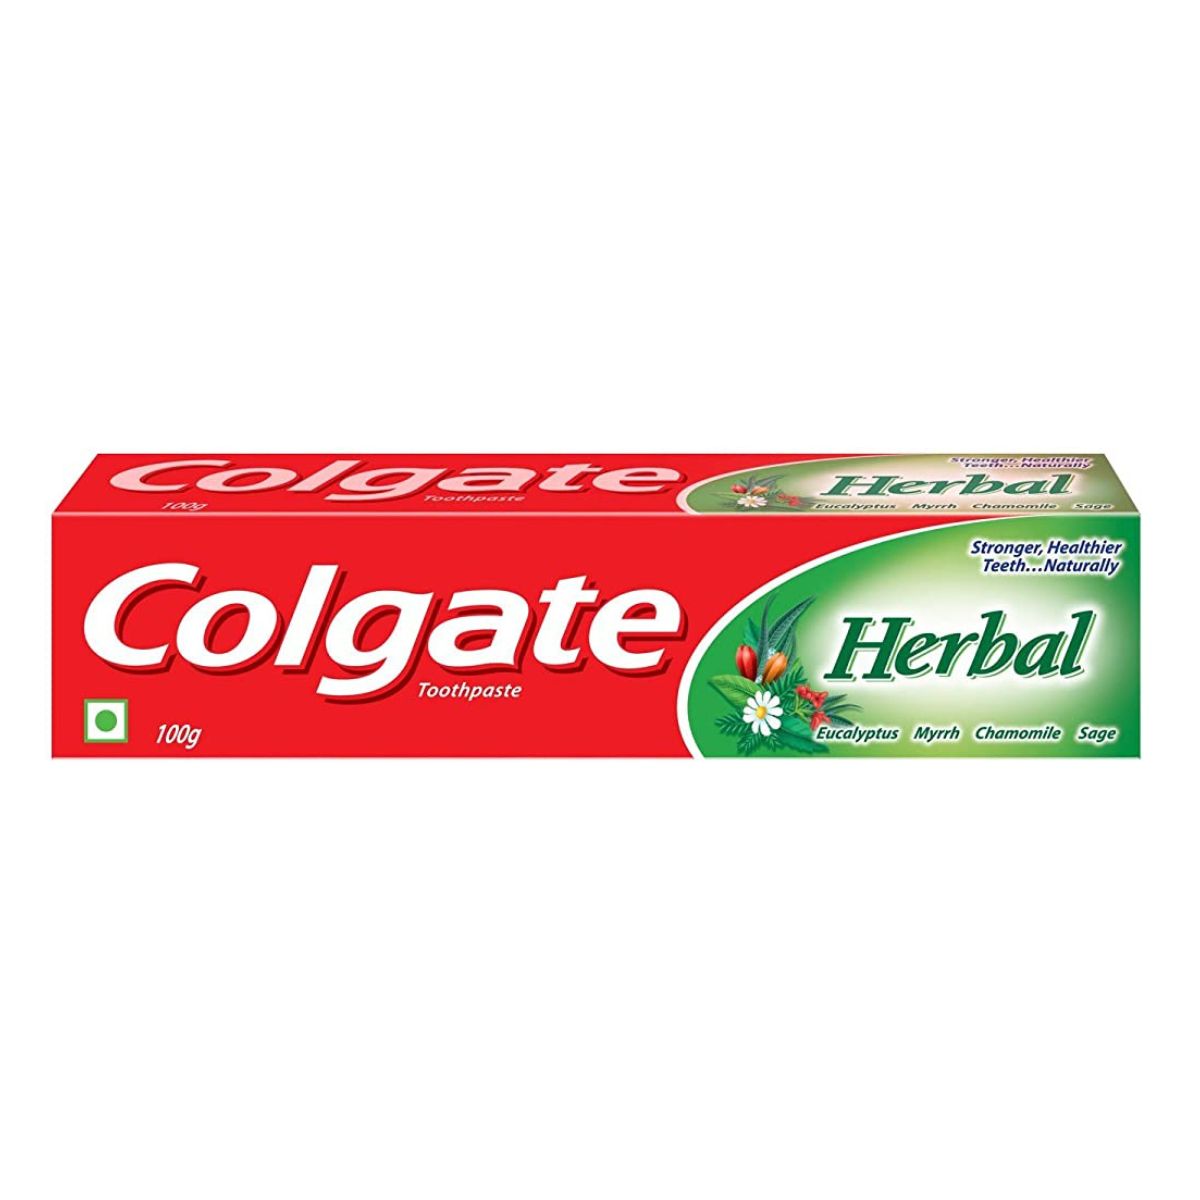 Colgate Anticavity Toothpaste - Herbal Stronger Healthier Teeth - 100g